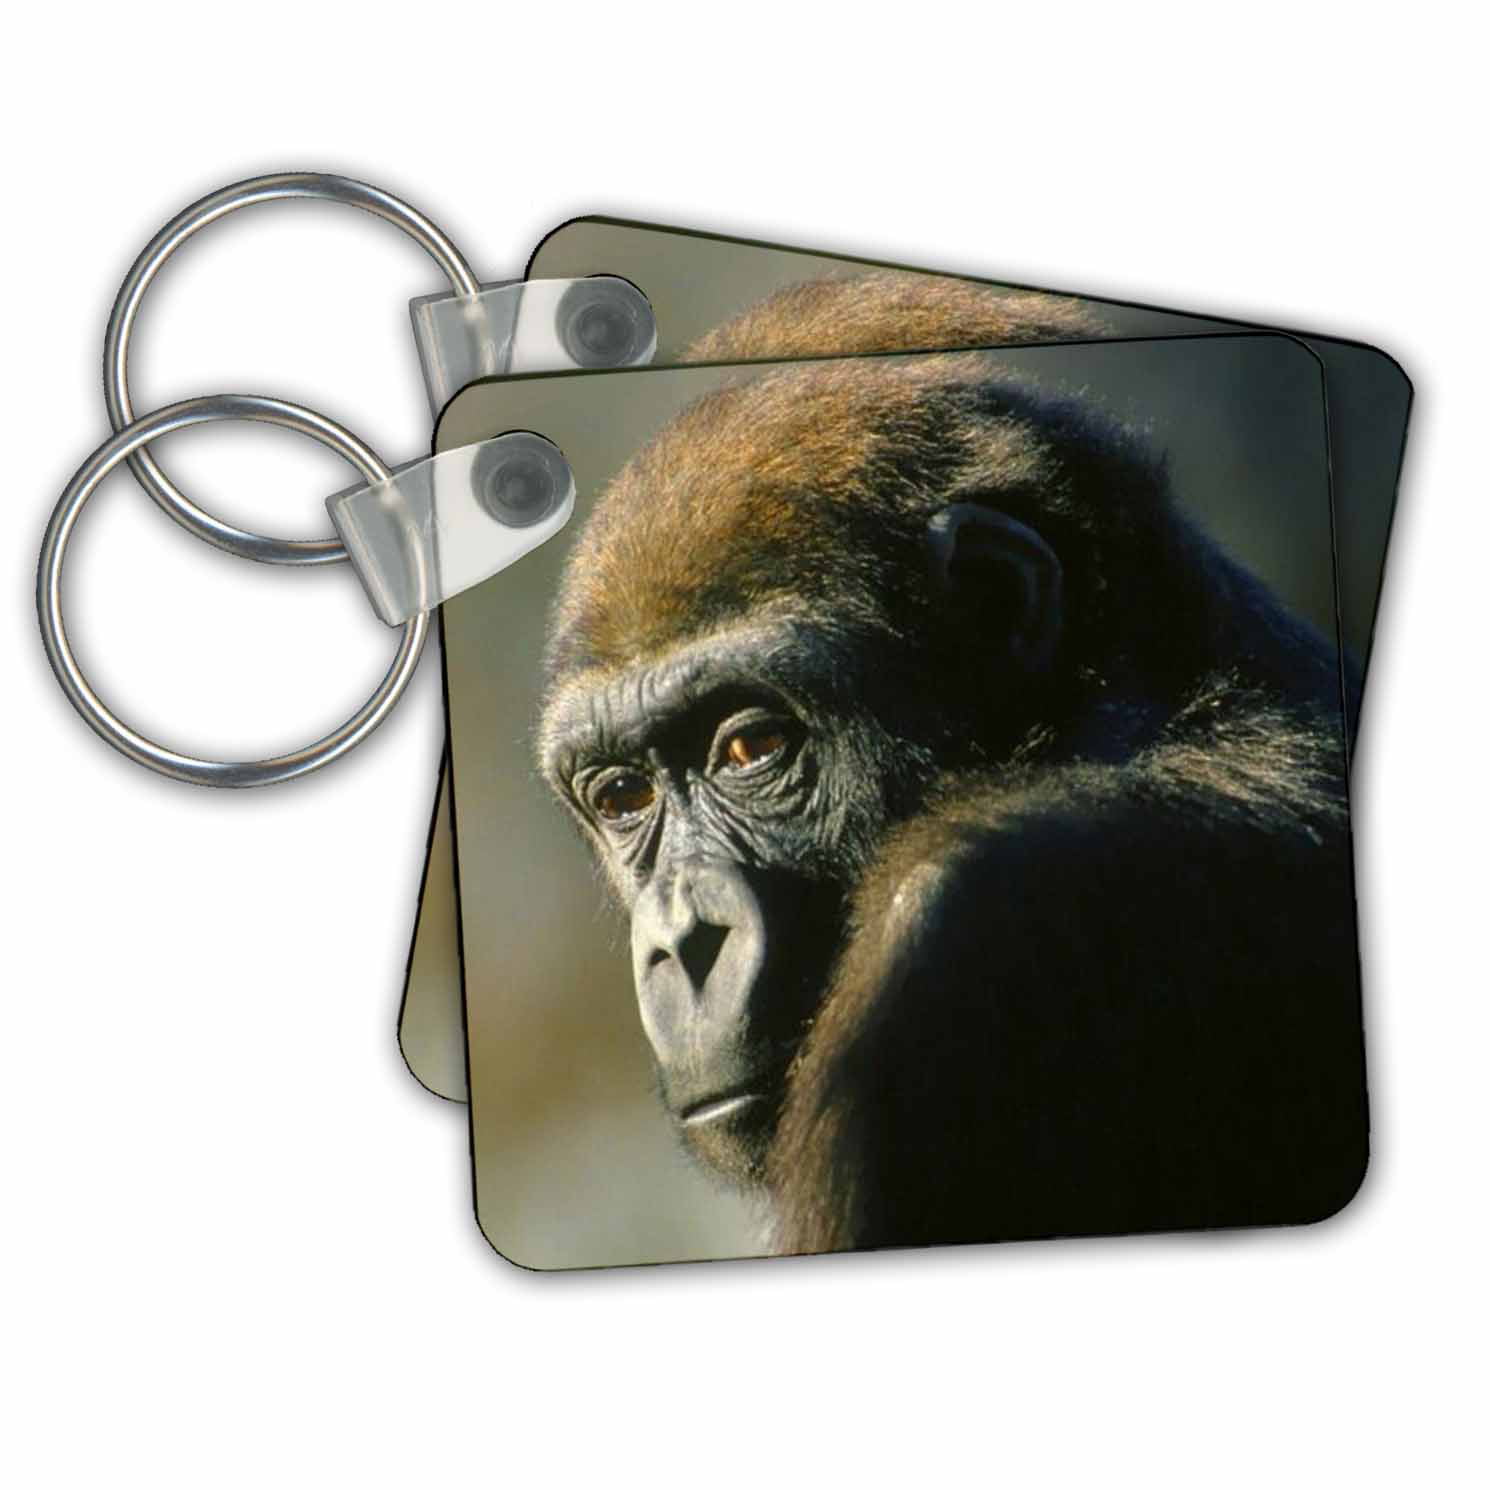 3dRose Gorilla Portrait - Key Chains, 2.25 by 2.25-inch, set of 2 ...